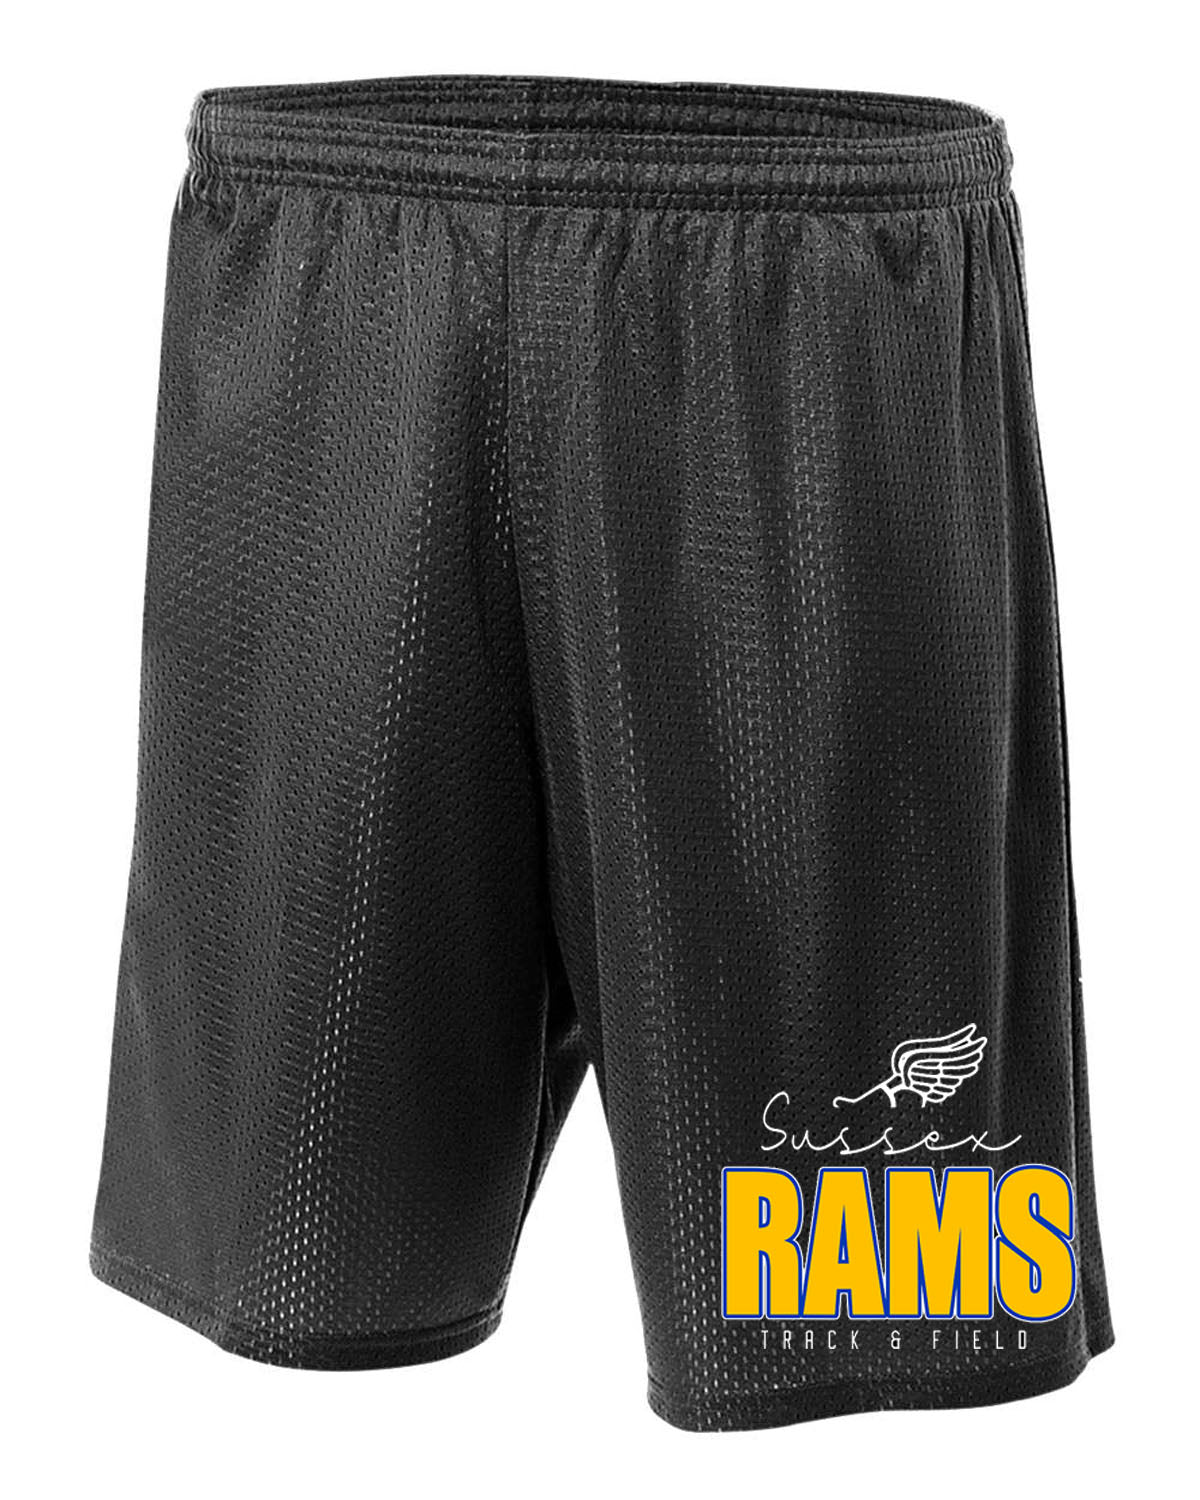 Sussex Rams Track Mesh Shorts Design 4